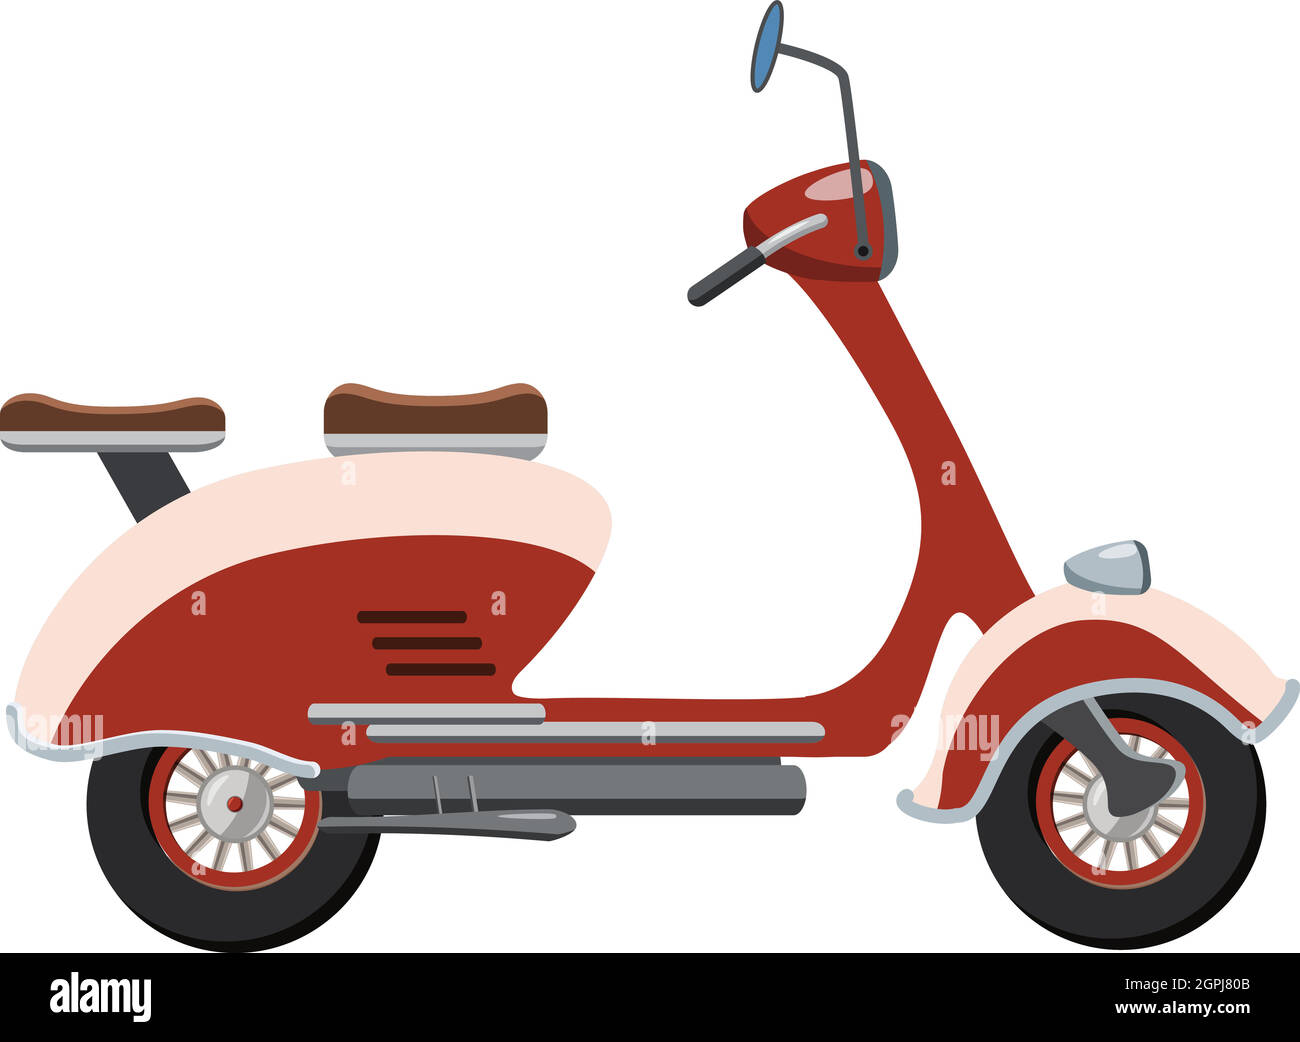 Scooter motorbike icon, cartoon style Stock Vector